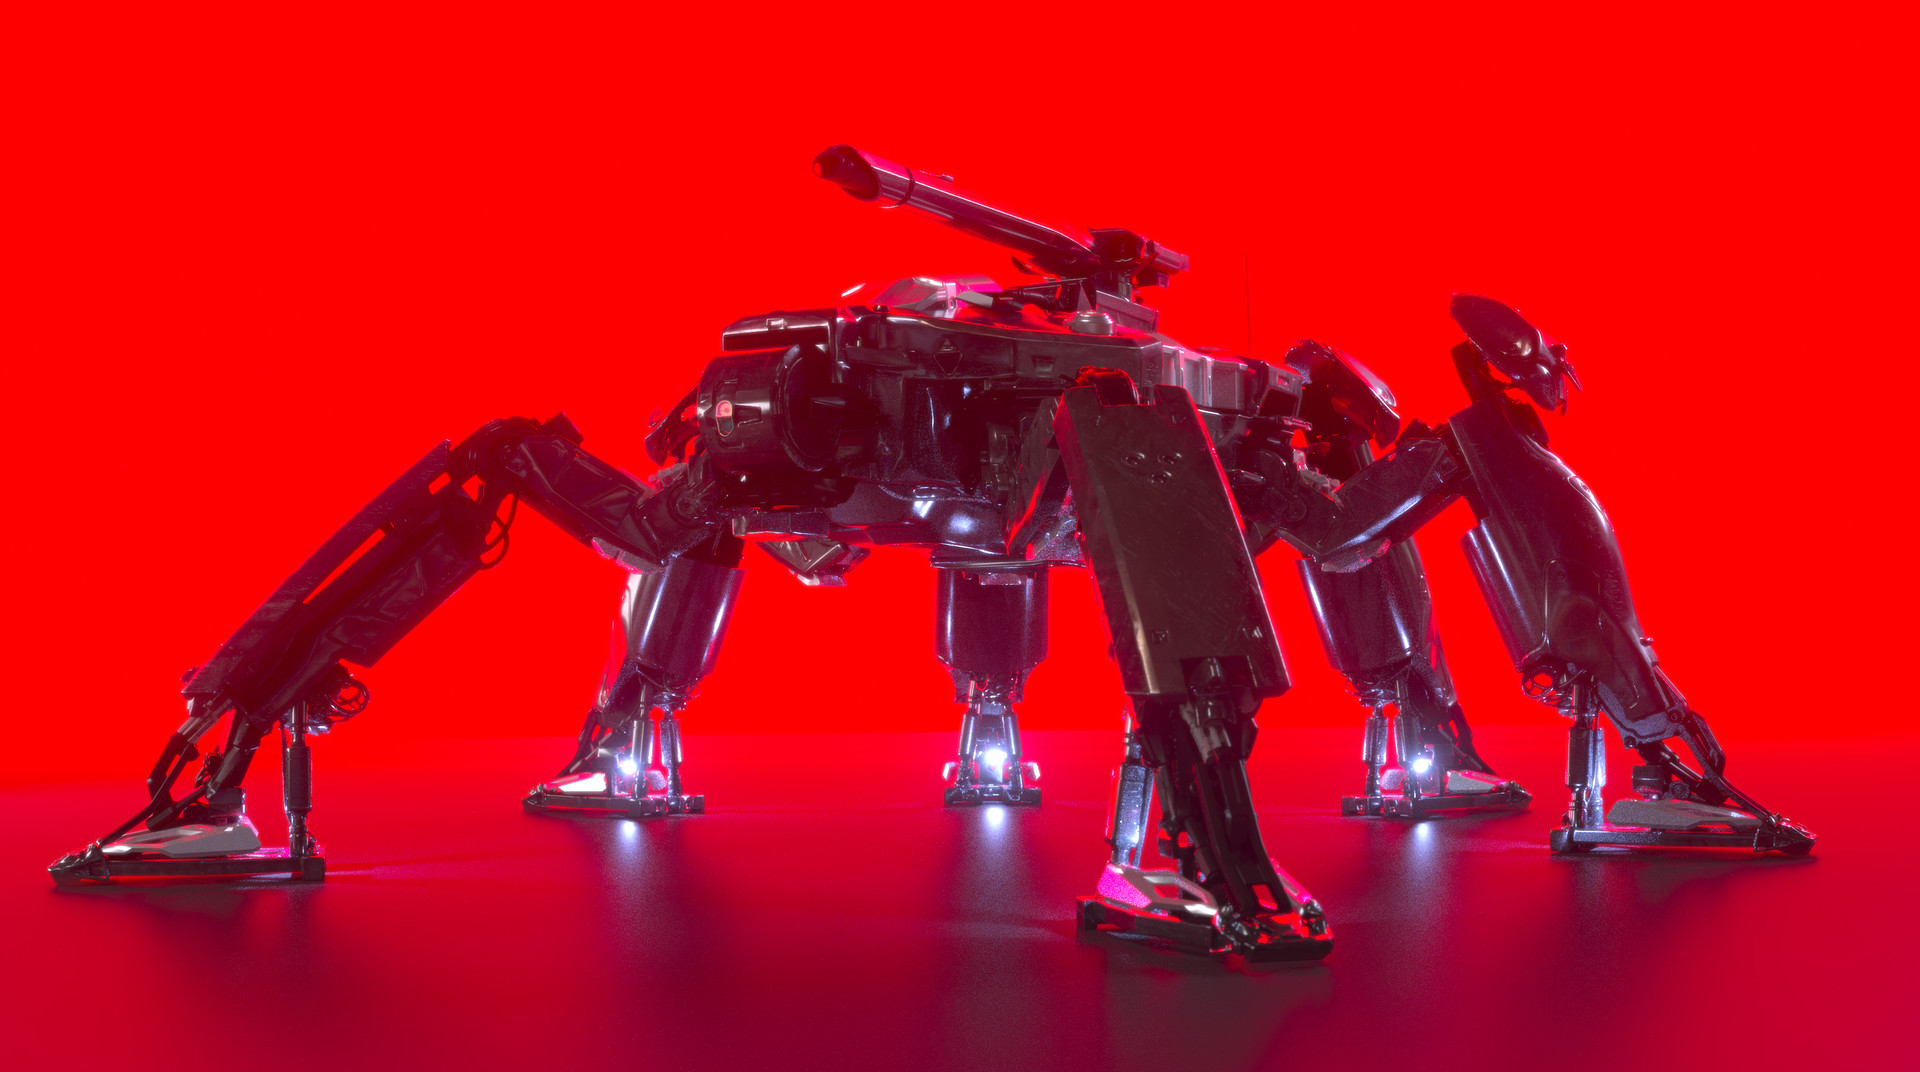 Swang Digital Art Artwork Robot Vehicle 1920x1072